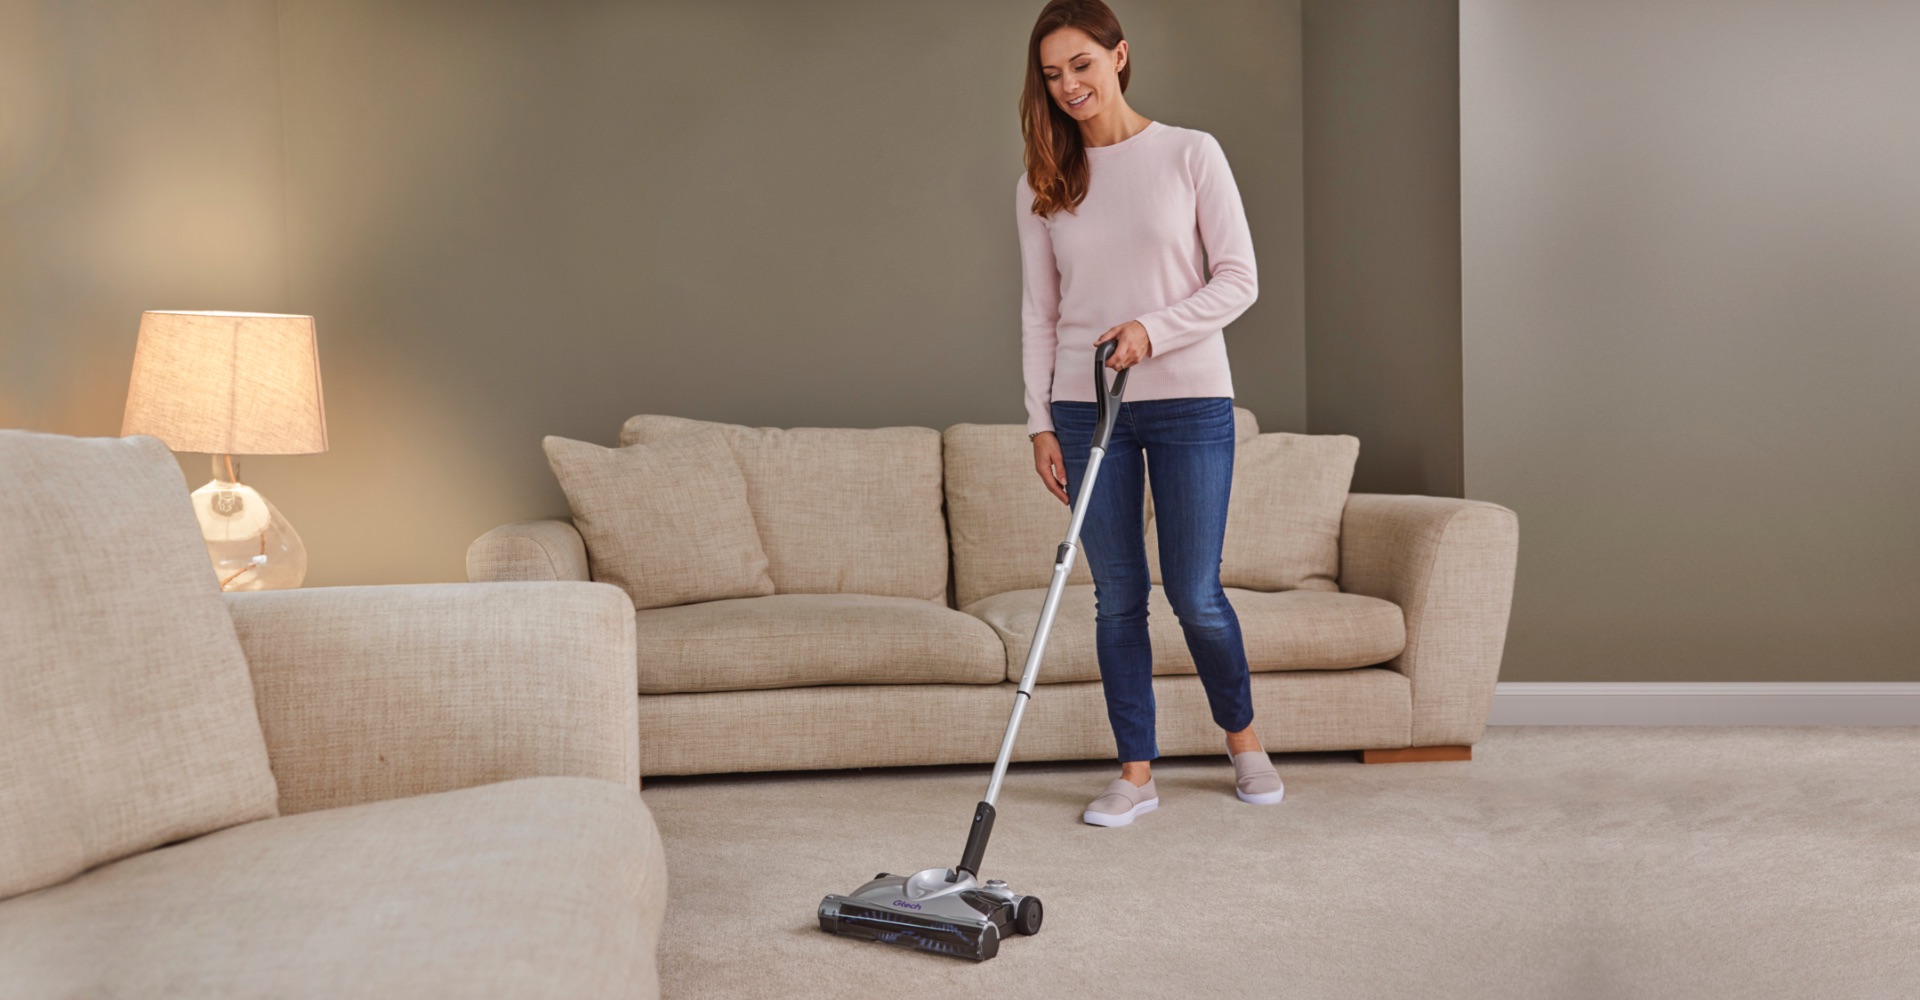 SW02 advanced carpet sweeper